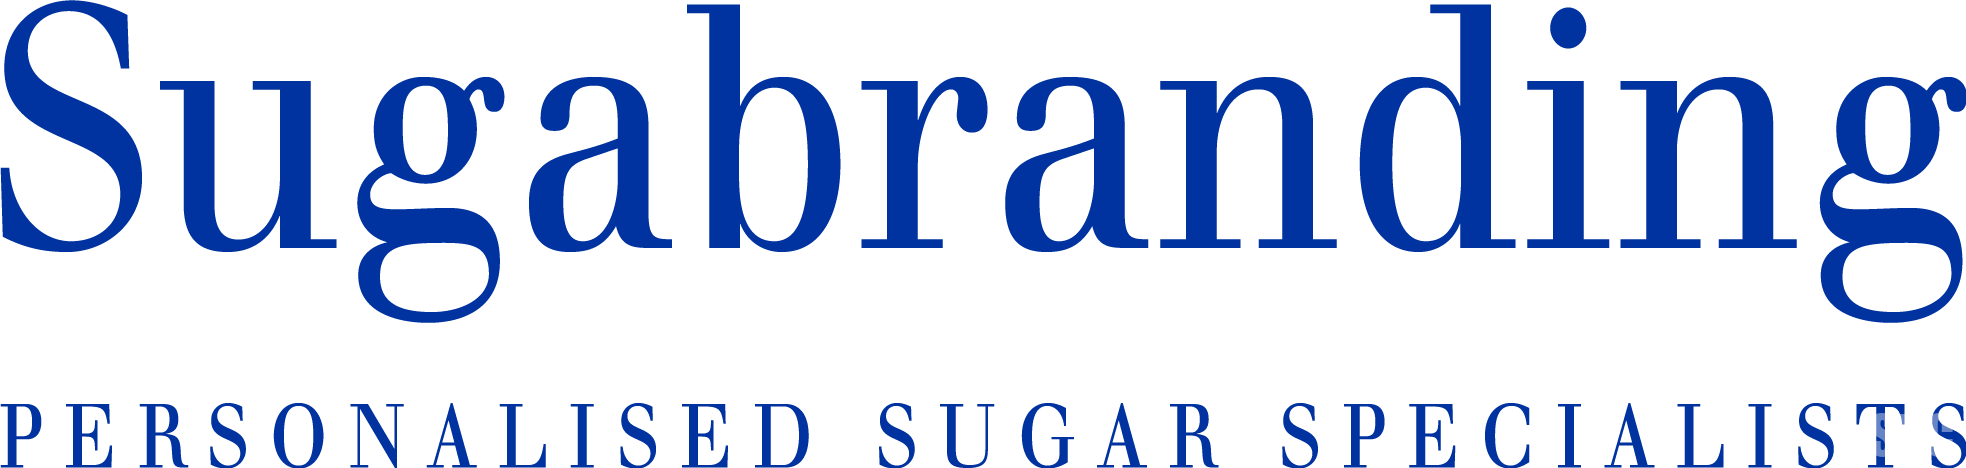 Sugarbranding.com